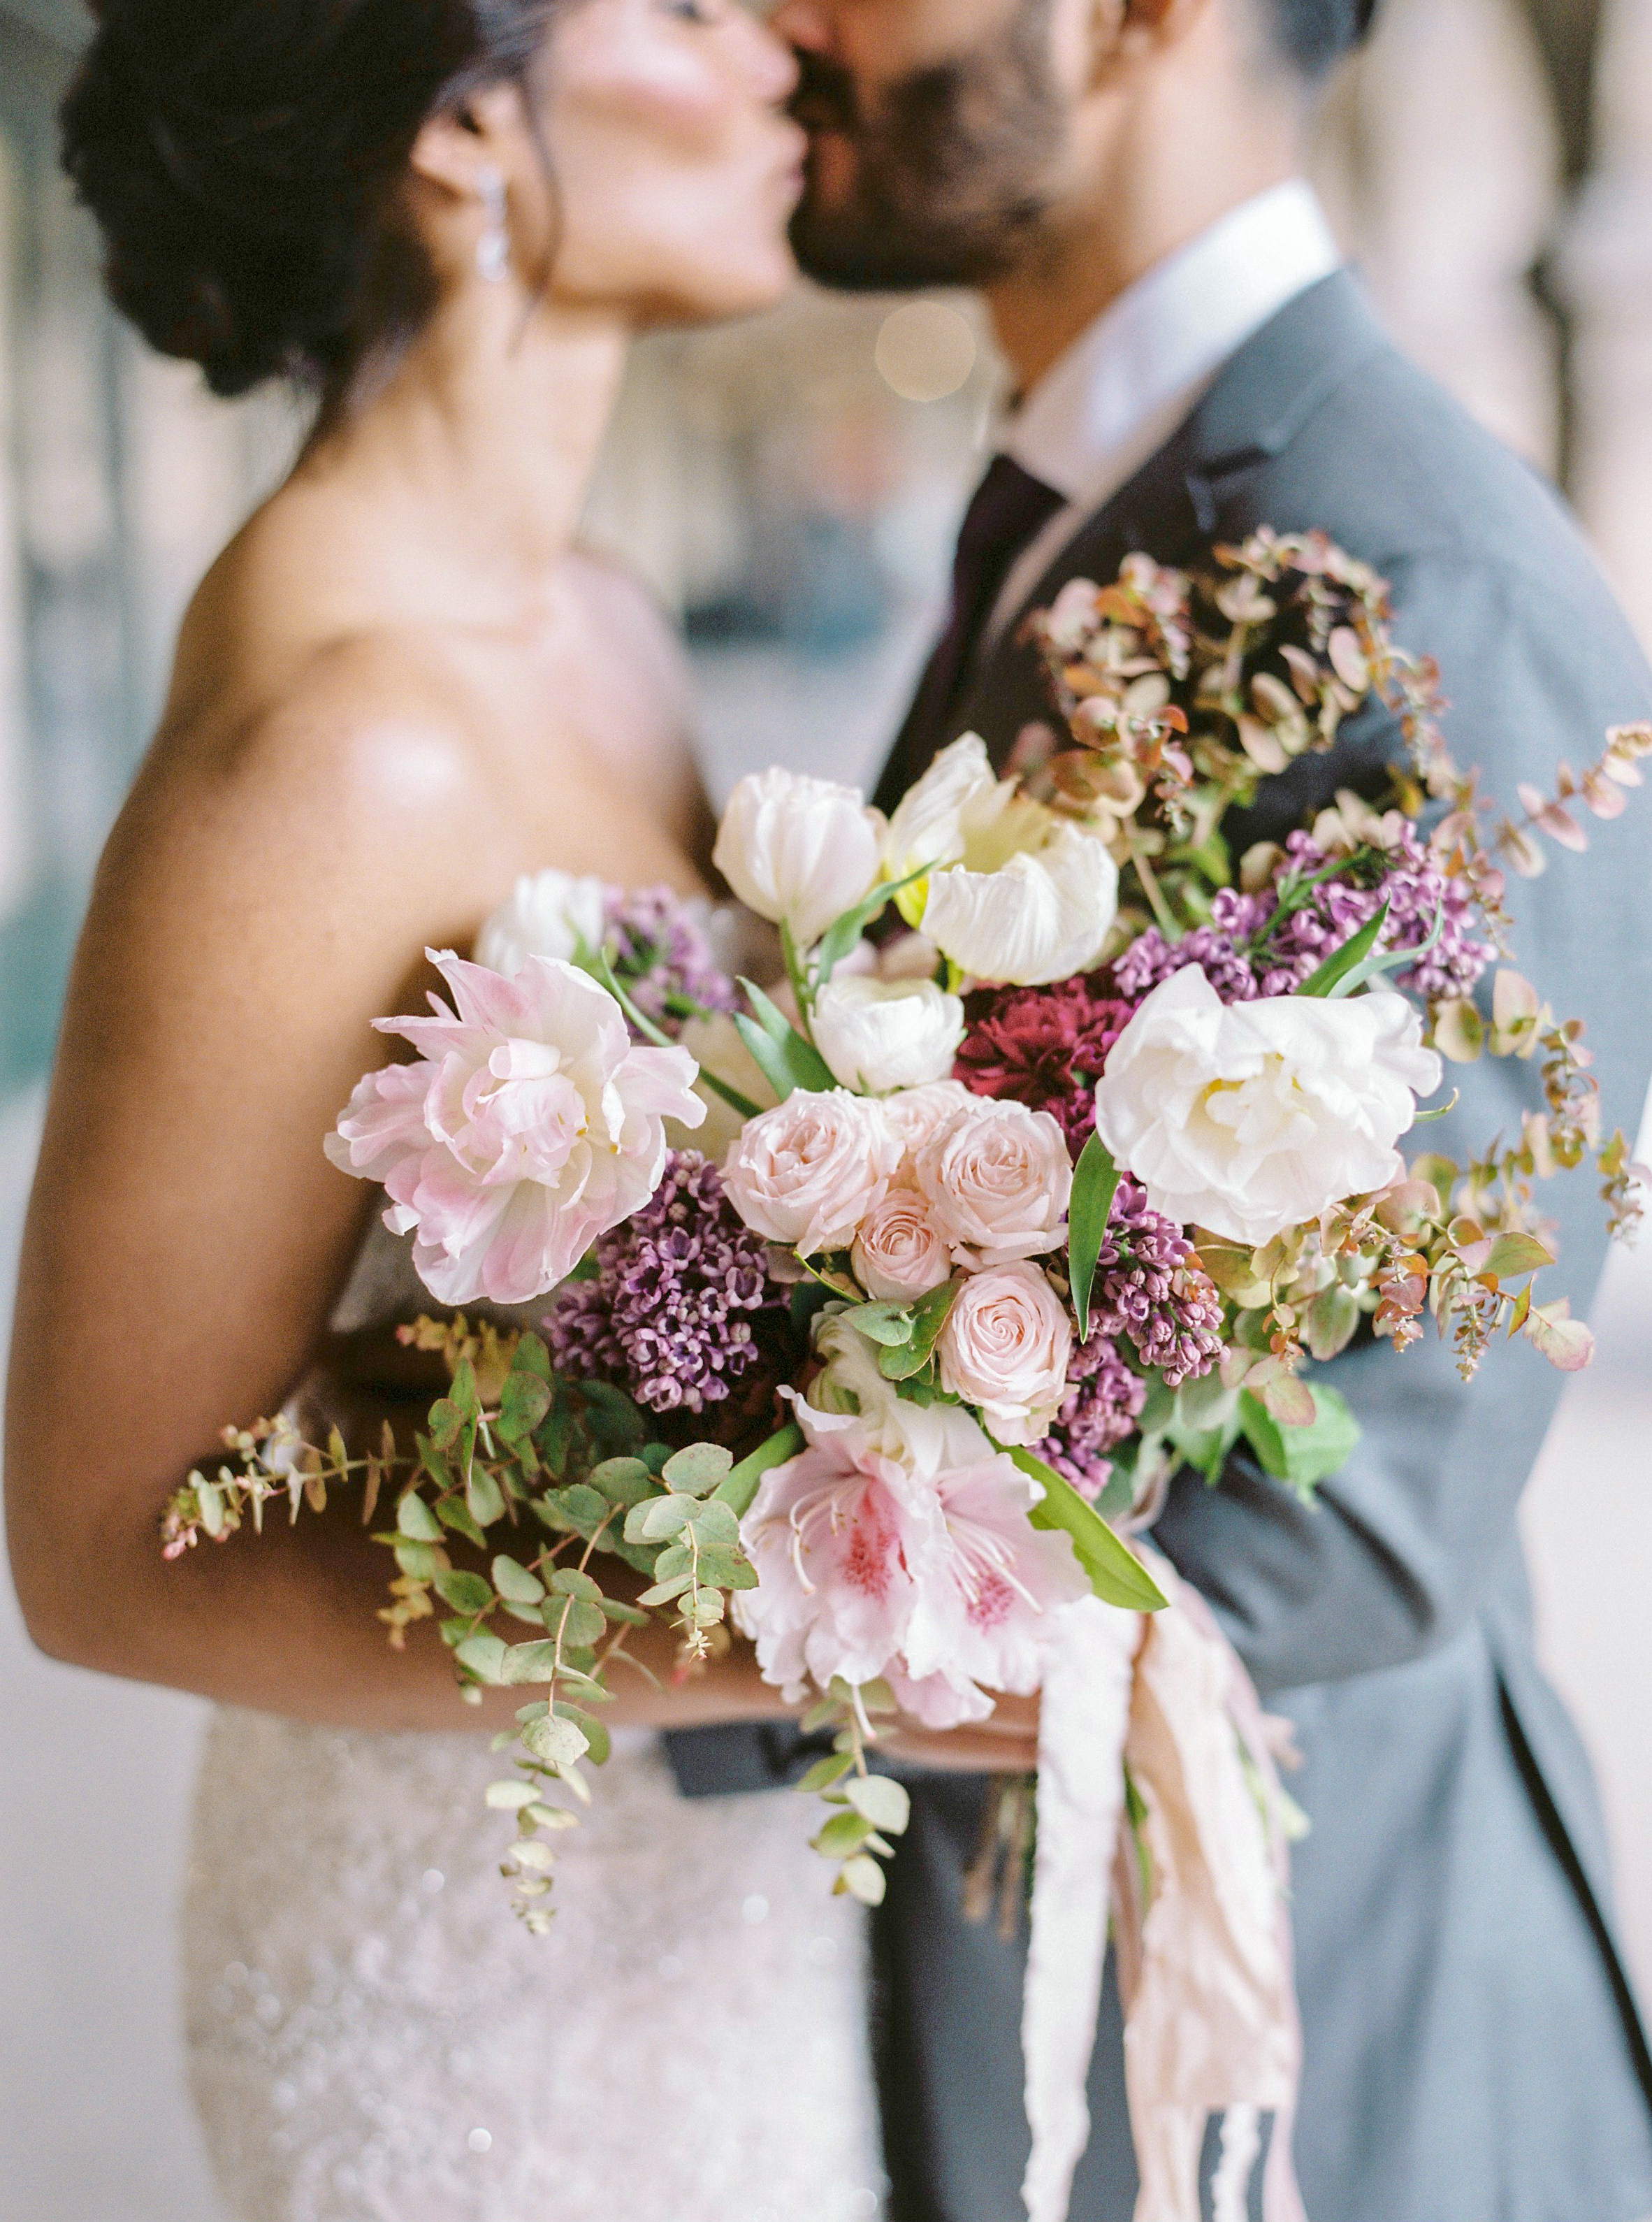 52 Ideas for Your Spring Wedding  Bouquet  Martha Stewart 